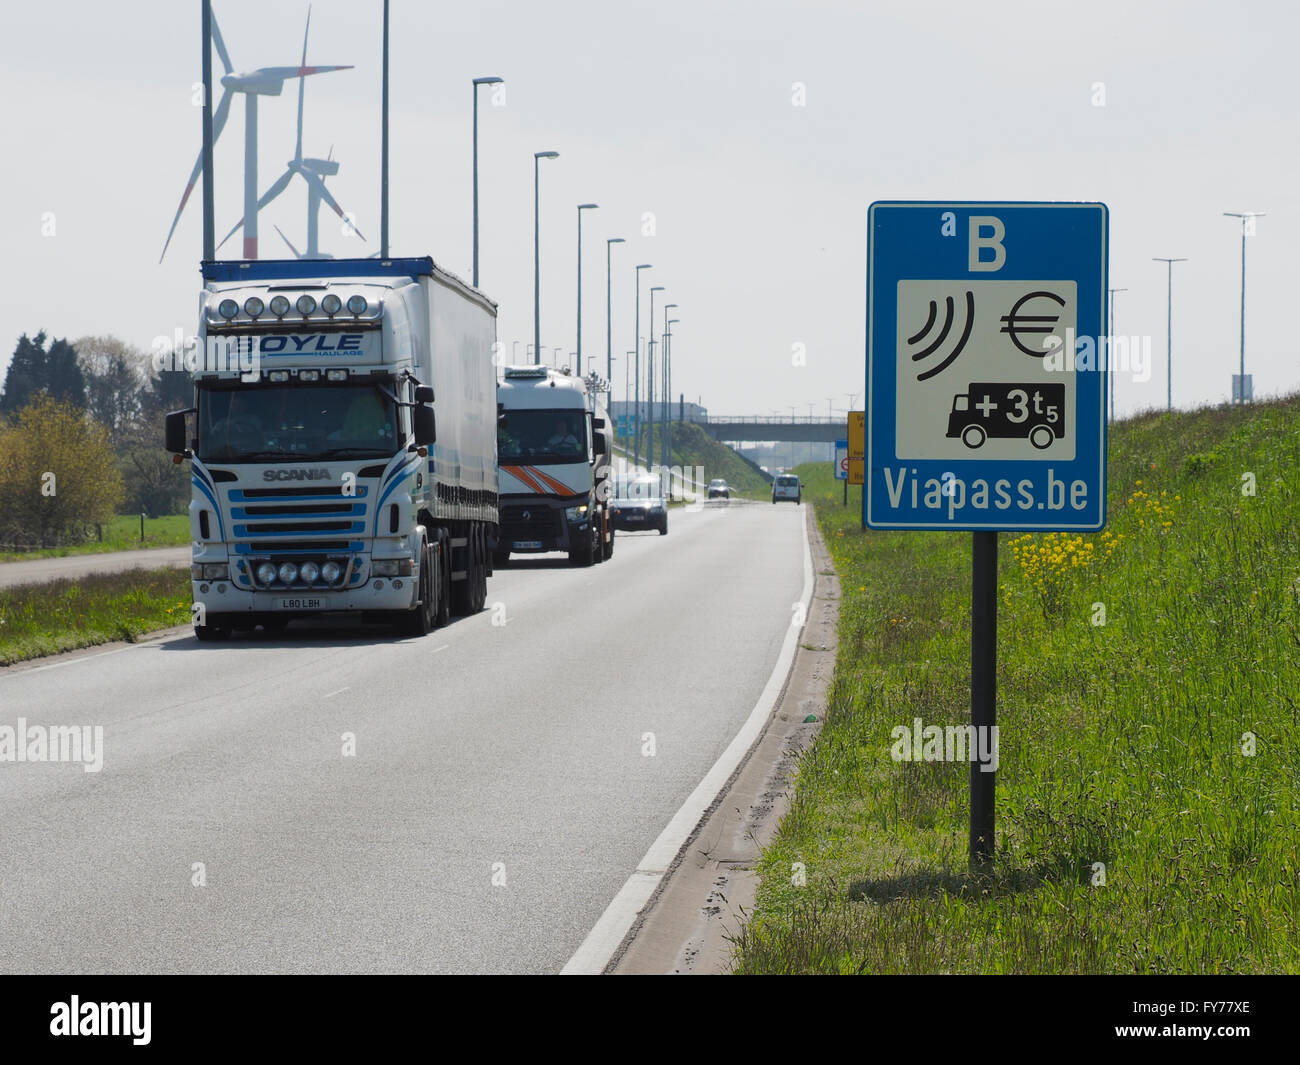 Camiones circulando en o a través de Bélgica deben pagar un canon, utilizando el sistema de viapass electrónica. Hazeldonk, Bélgica Foto de stock